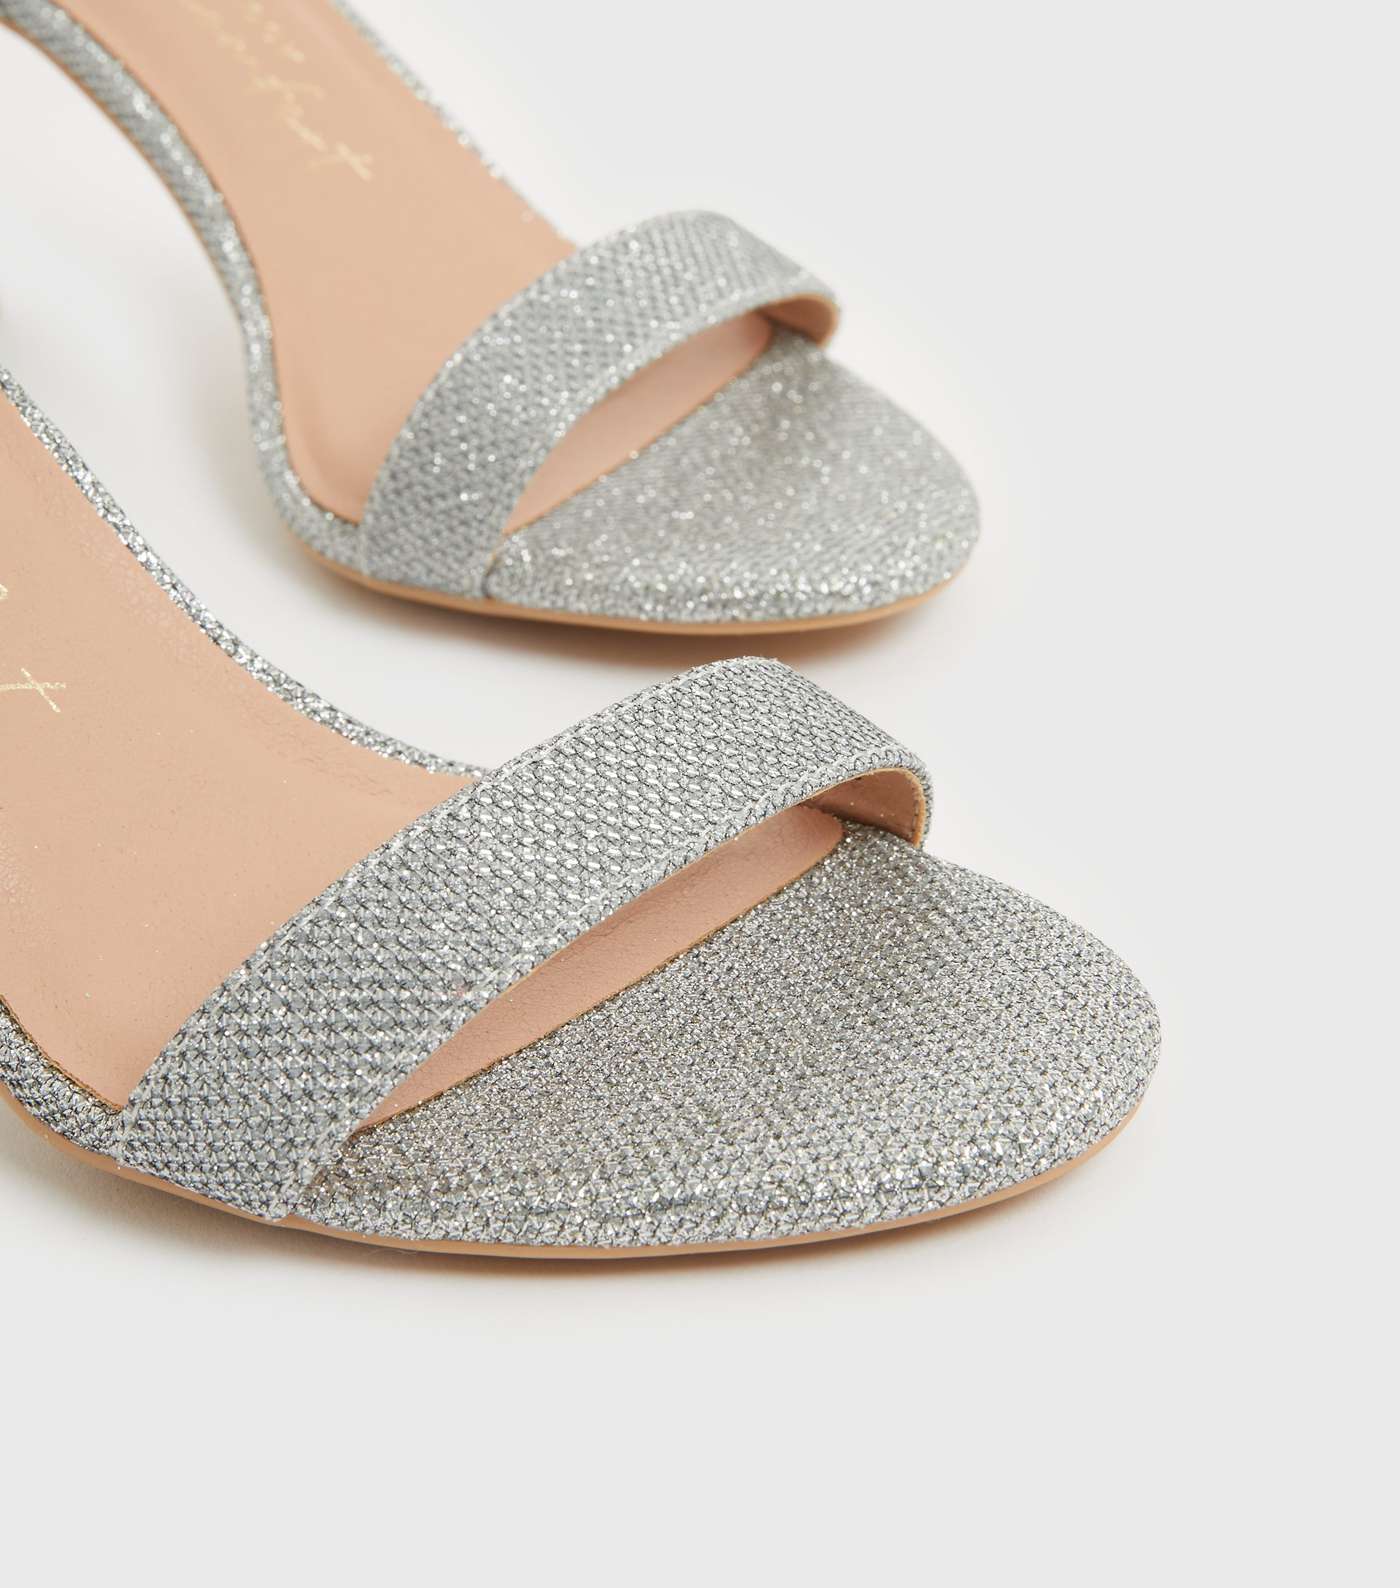 Wide Fit Silver Glitter 2 Part Open Toe Stiletto Heel Sandals Image 4